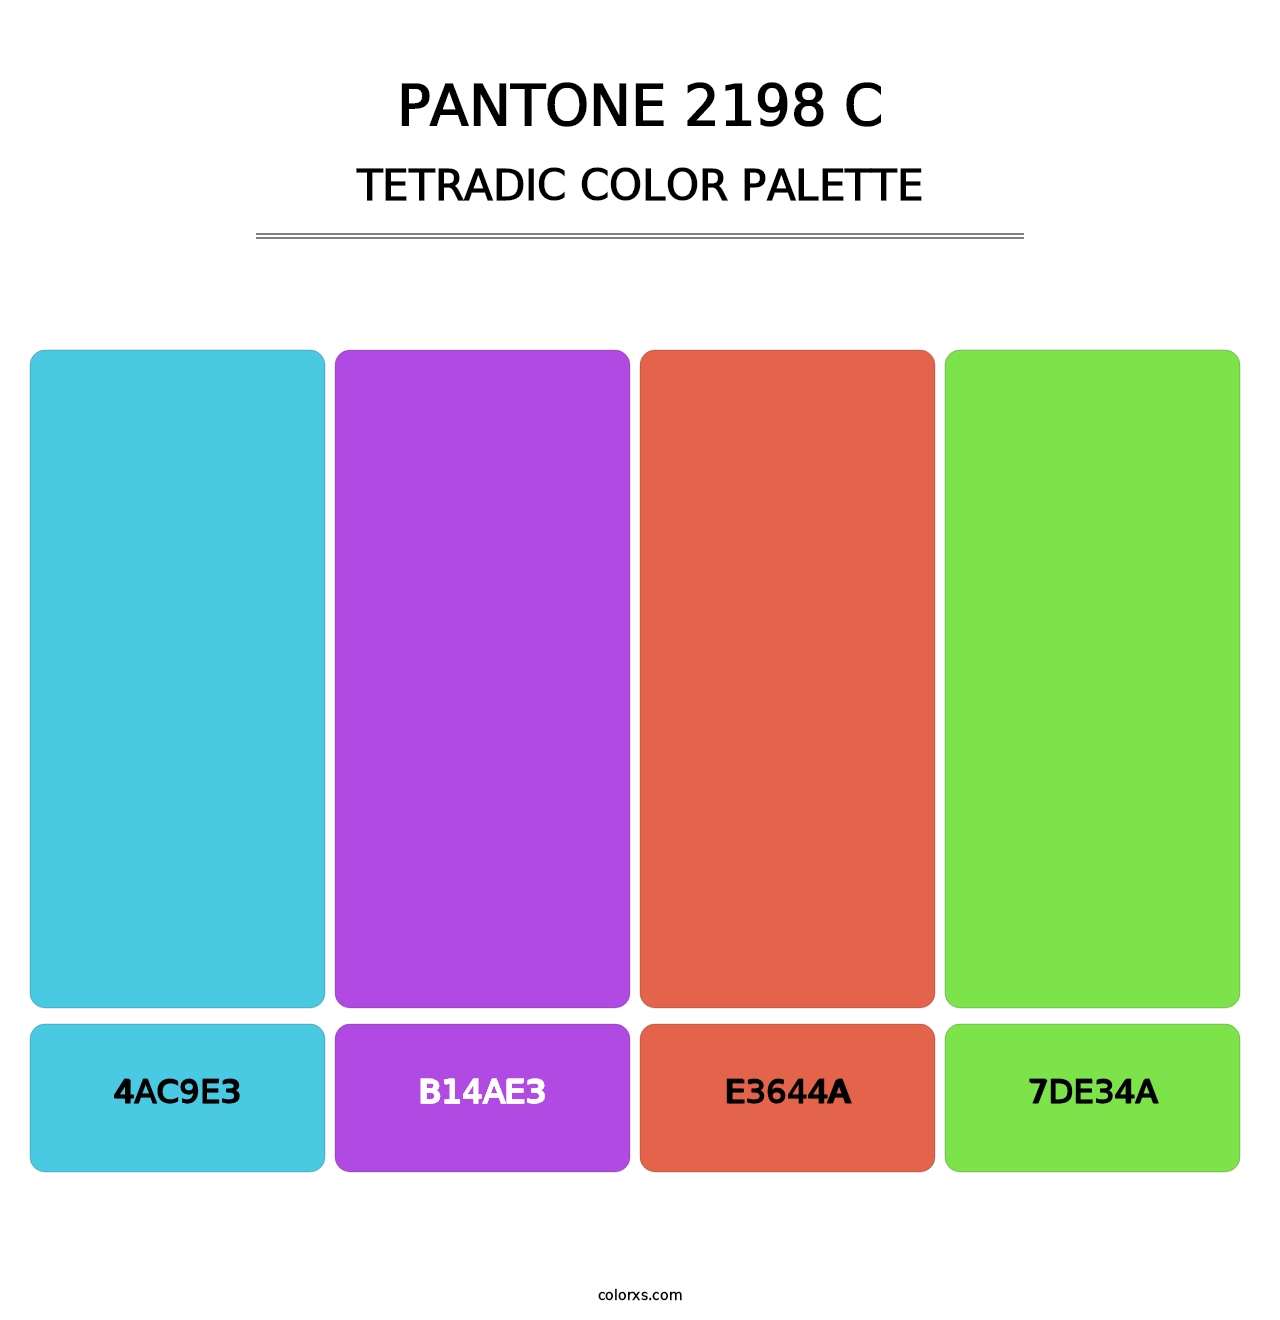 PANTONE 2198 C - Tetradic Color Palette